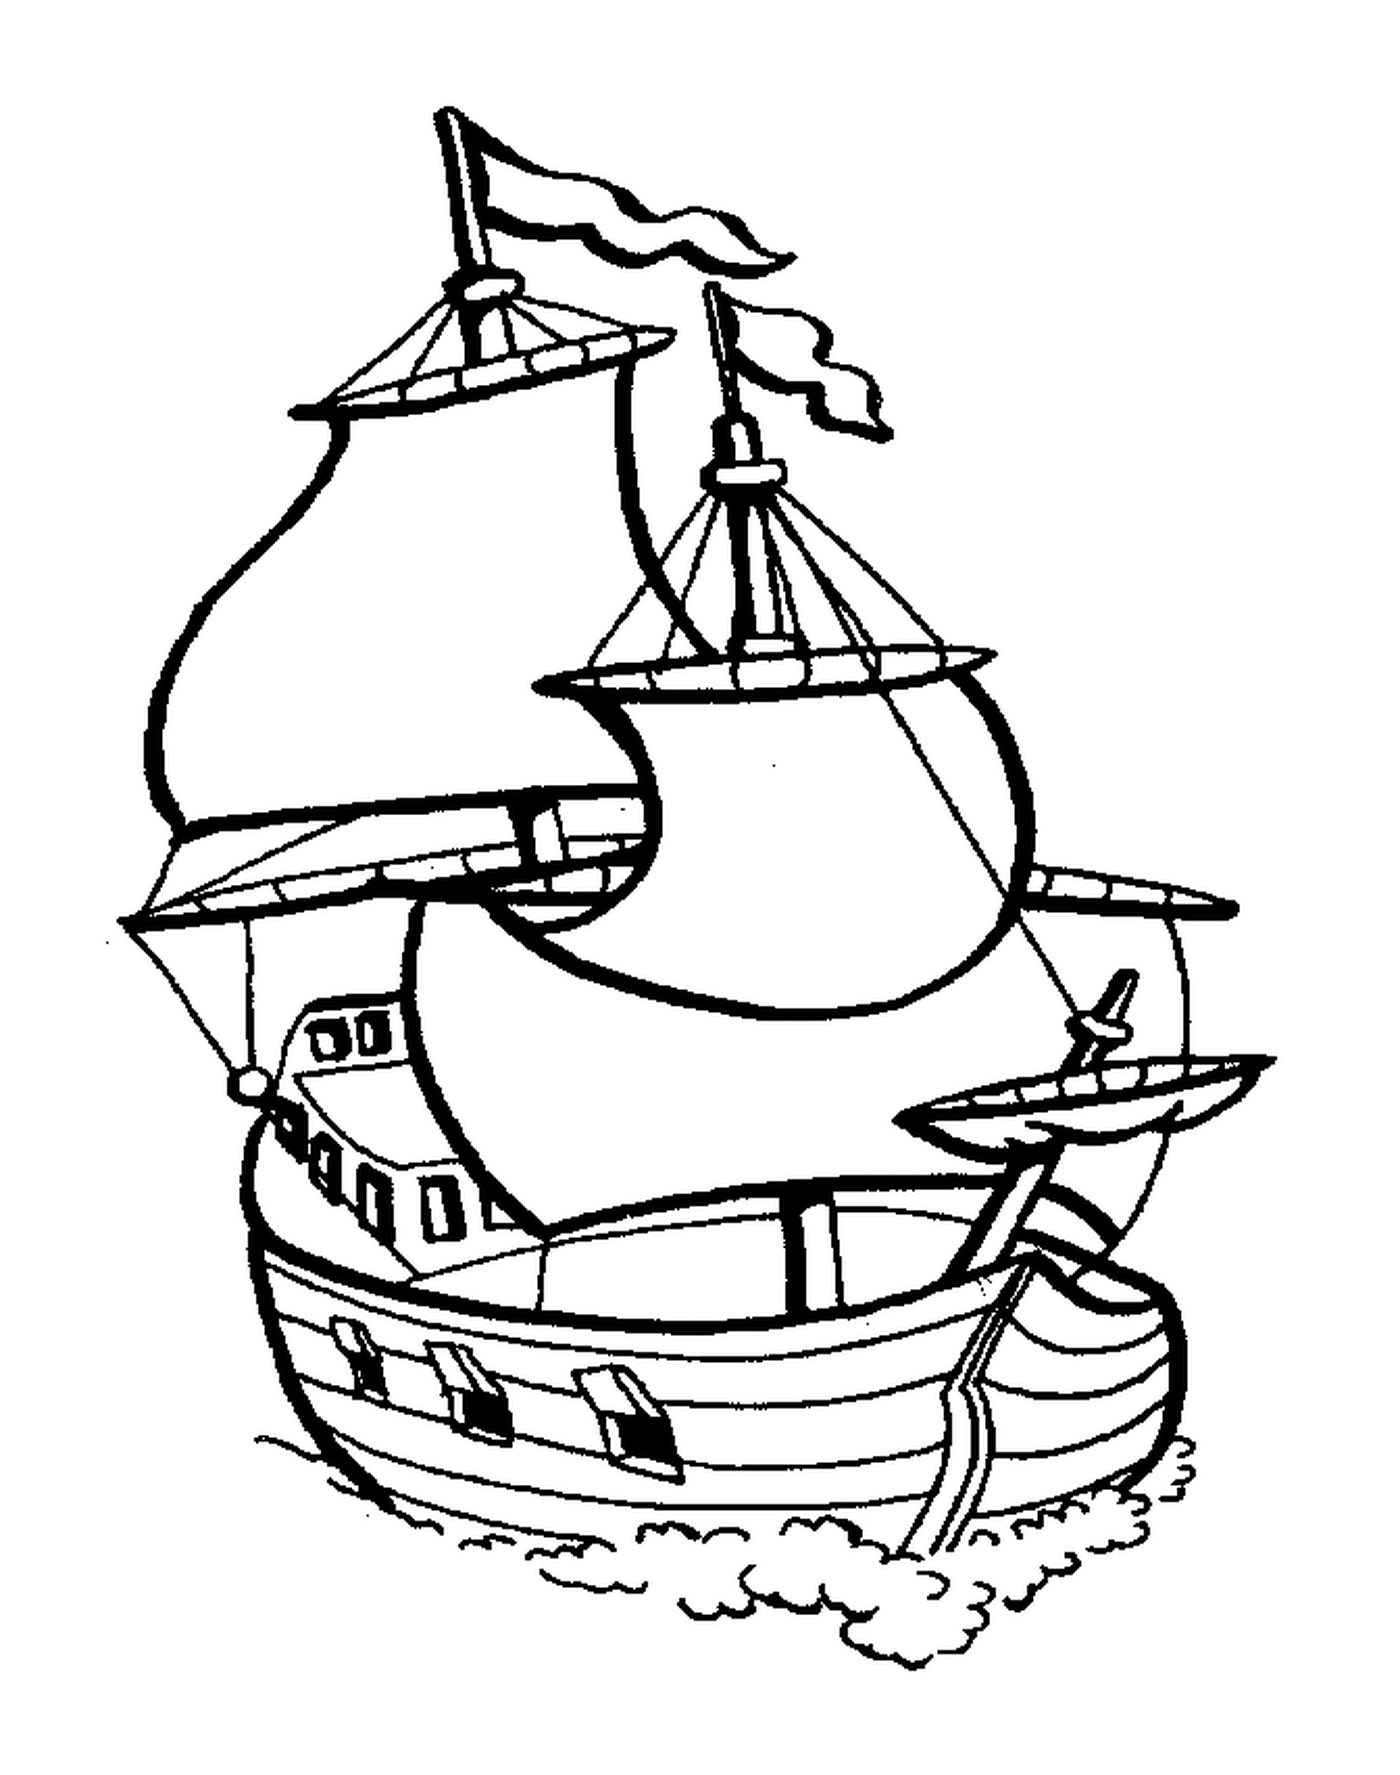  A sailboat 